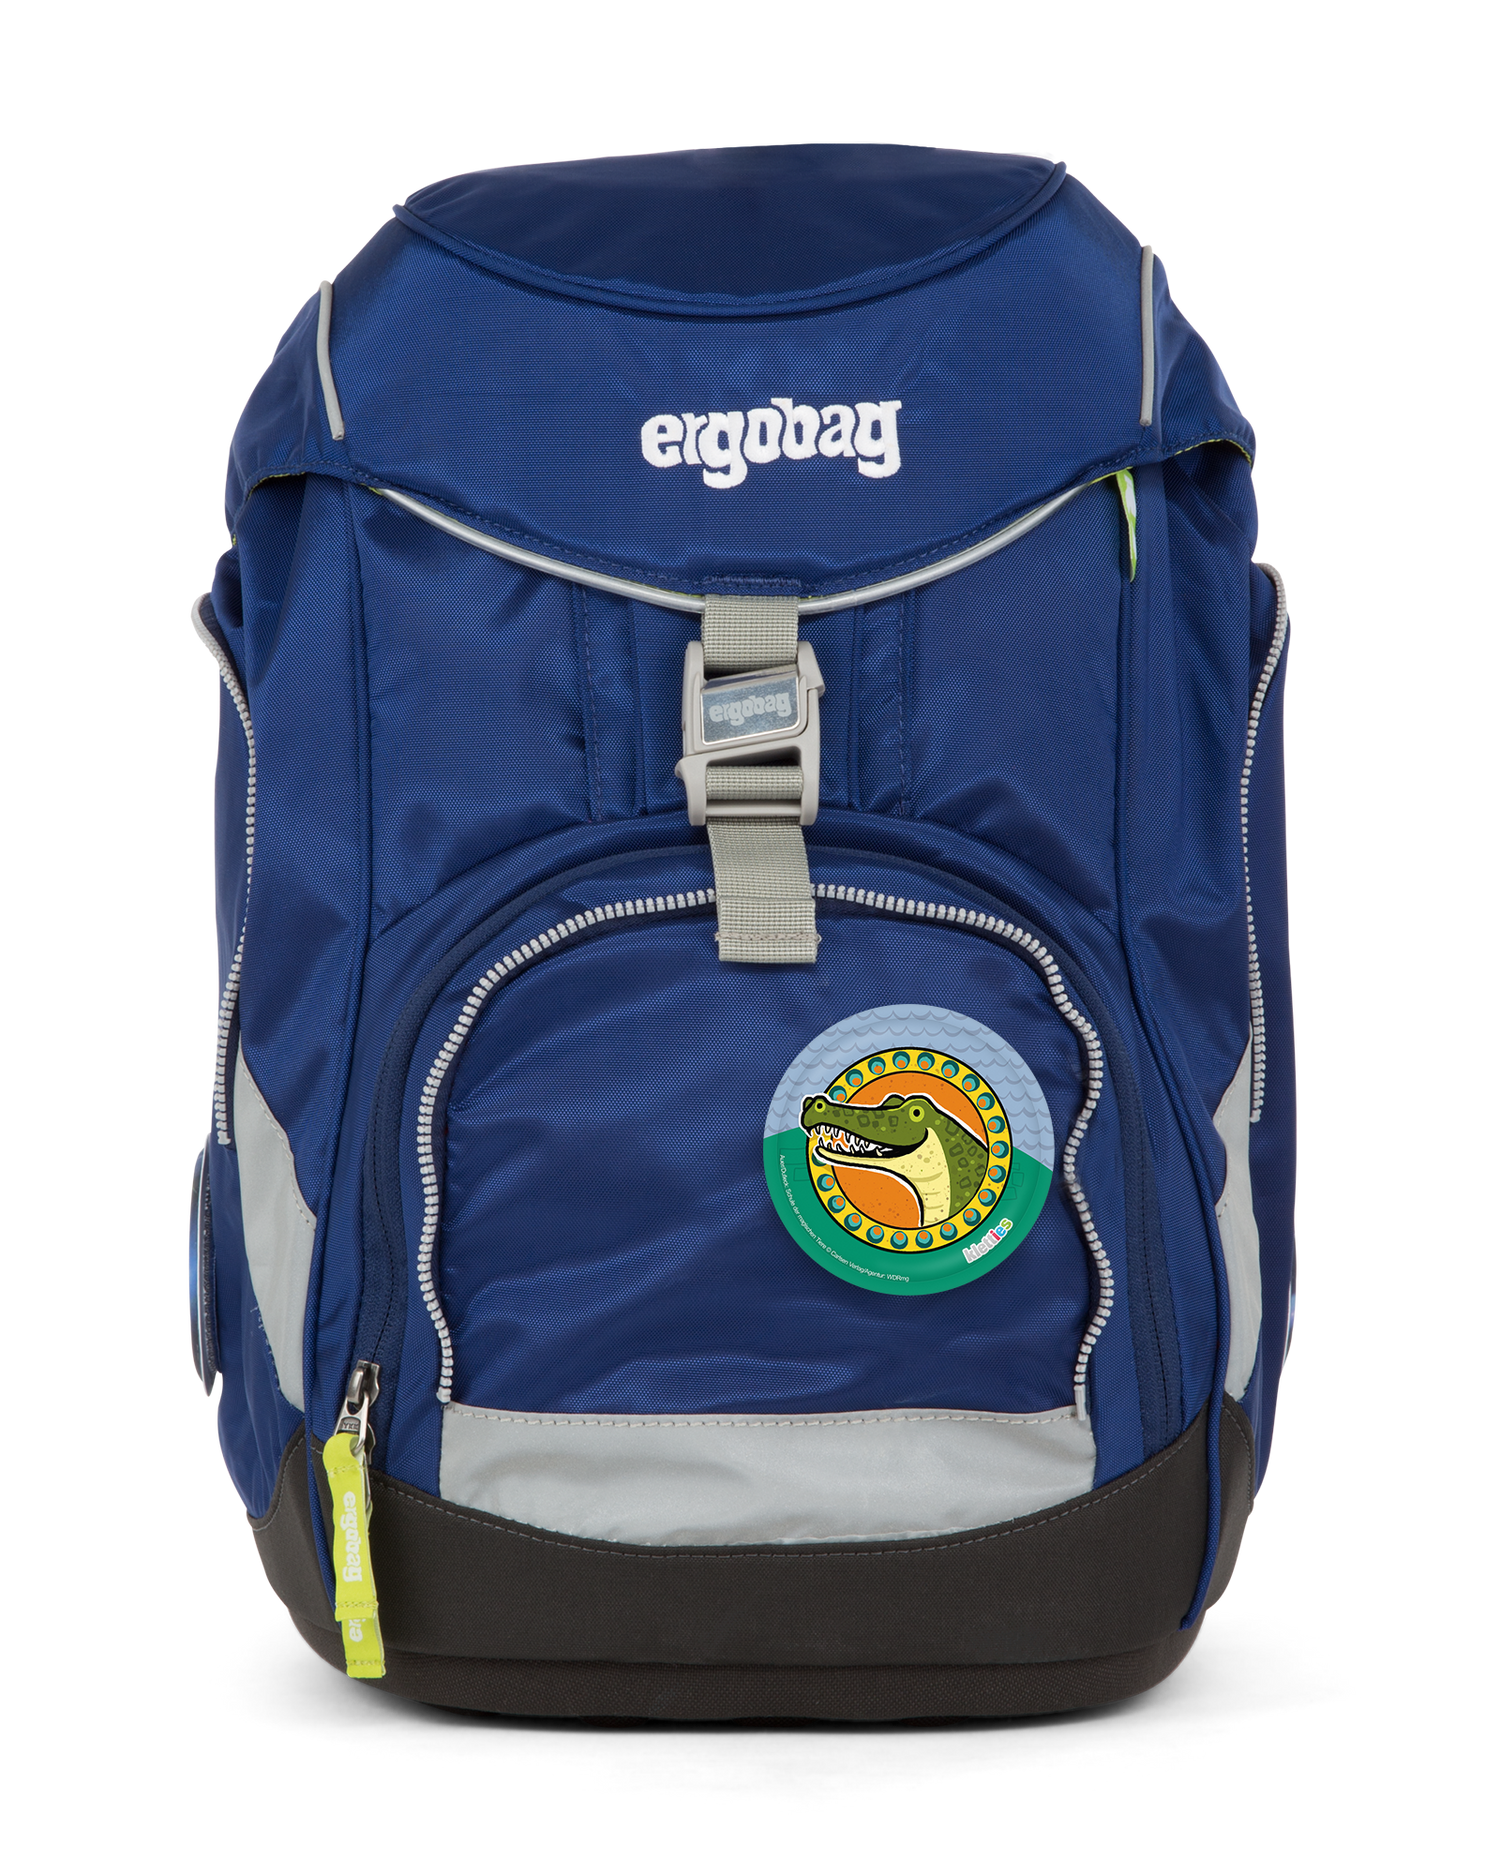 ergobag backpack with SdmT Rick Klettie